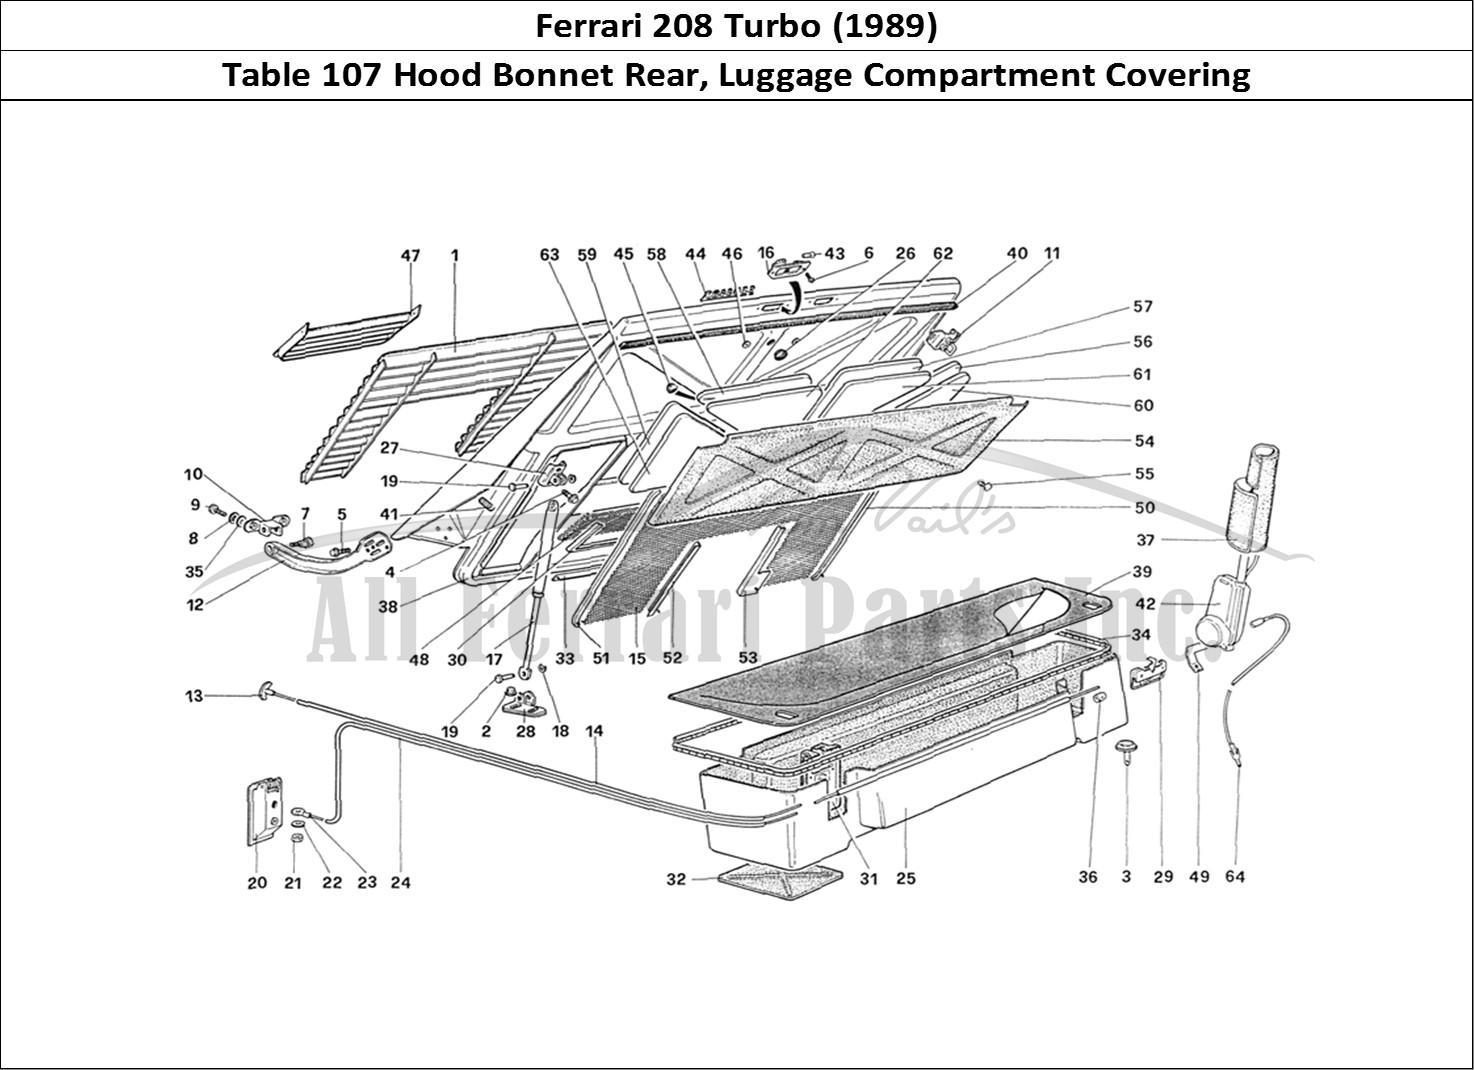 Ferrari Parts Ferrari 208 Turbo (1989) Page 107 Rear Bonnet and Luggagr C